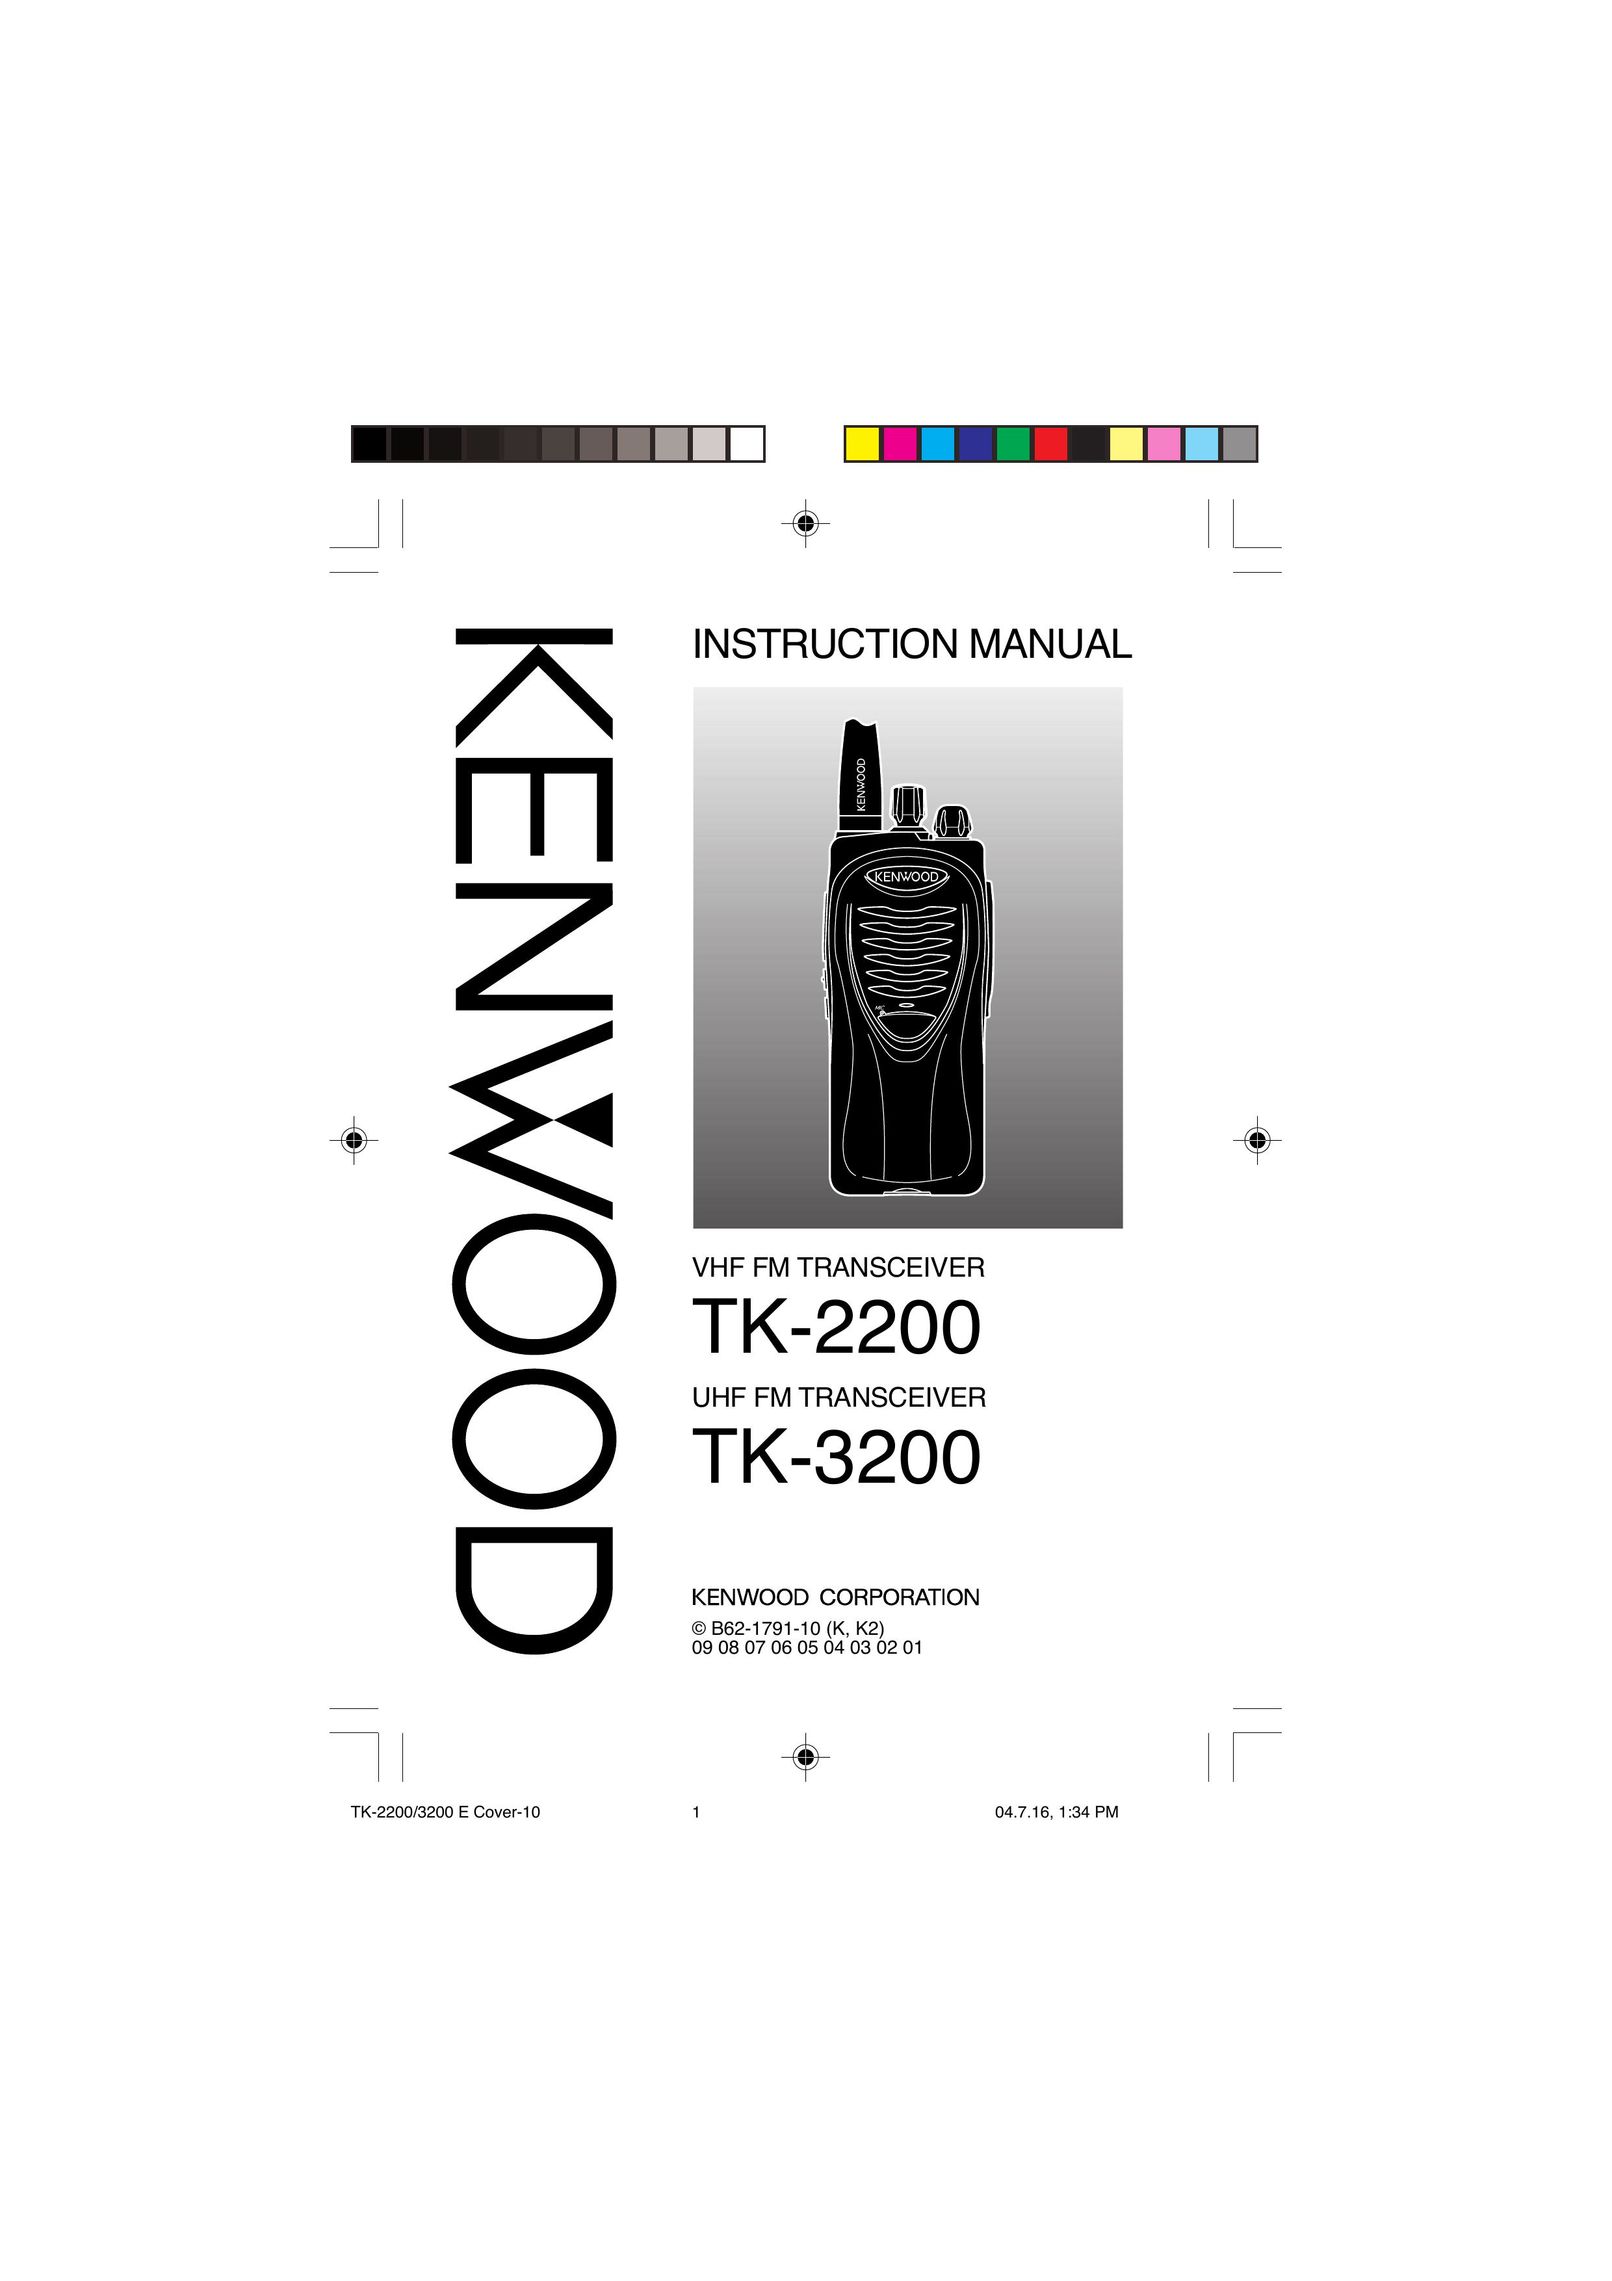 Kenwood TK-3200 Network Router User Manual